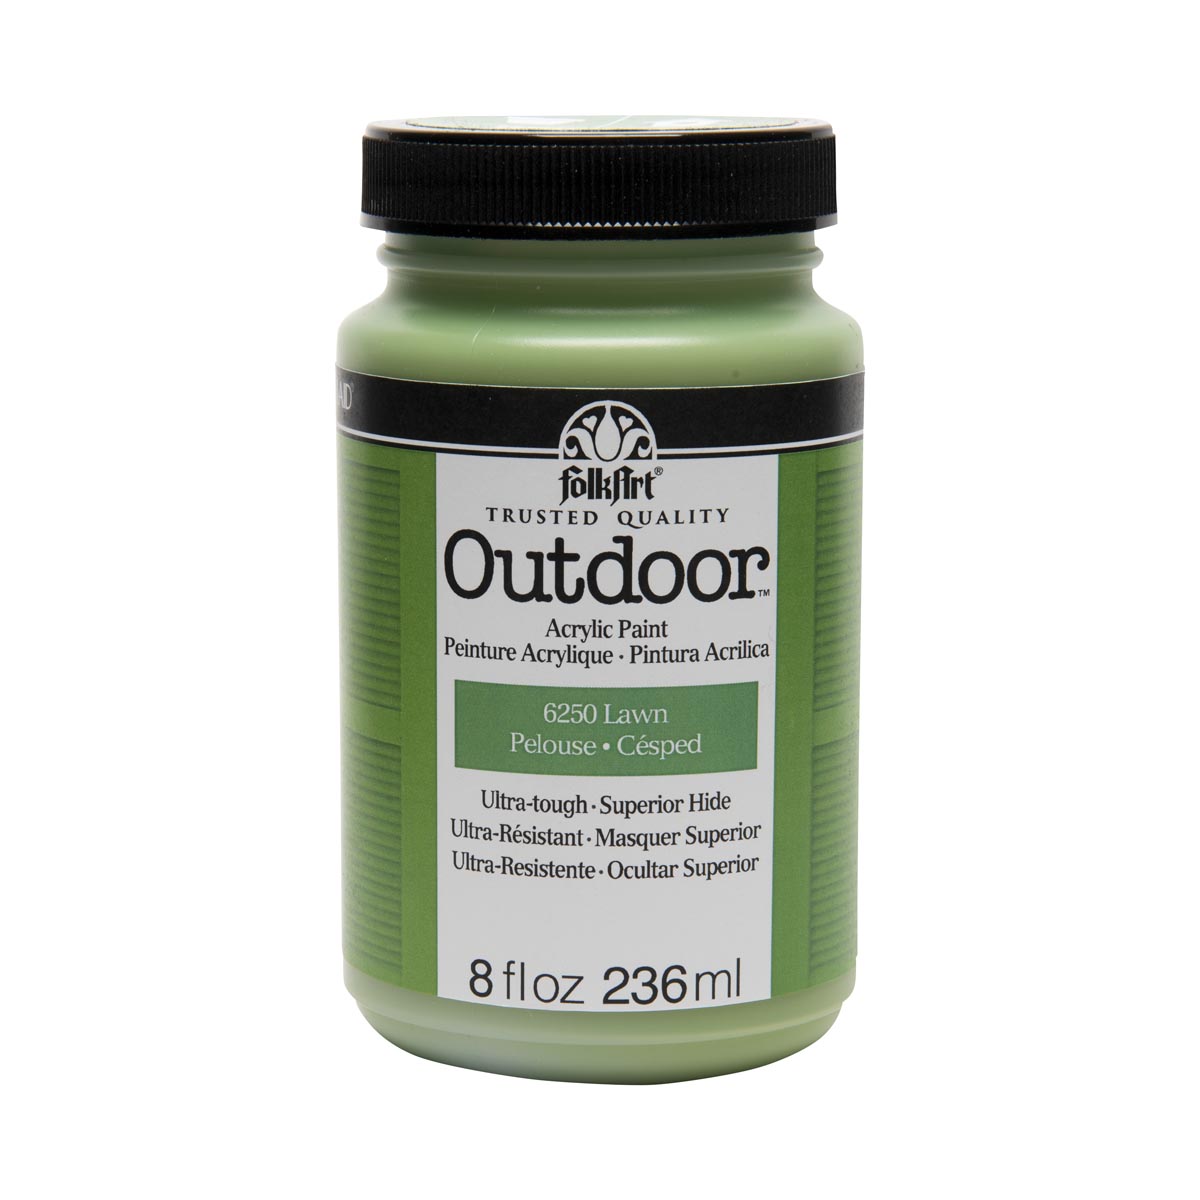 FolkArt ® Outdoor™ Acrylic Colors - Lawn, 8 oz. - 6250